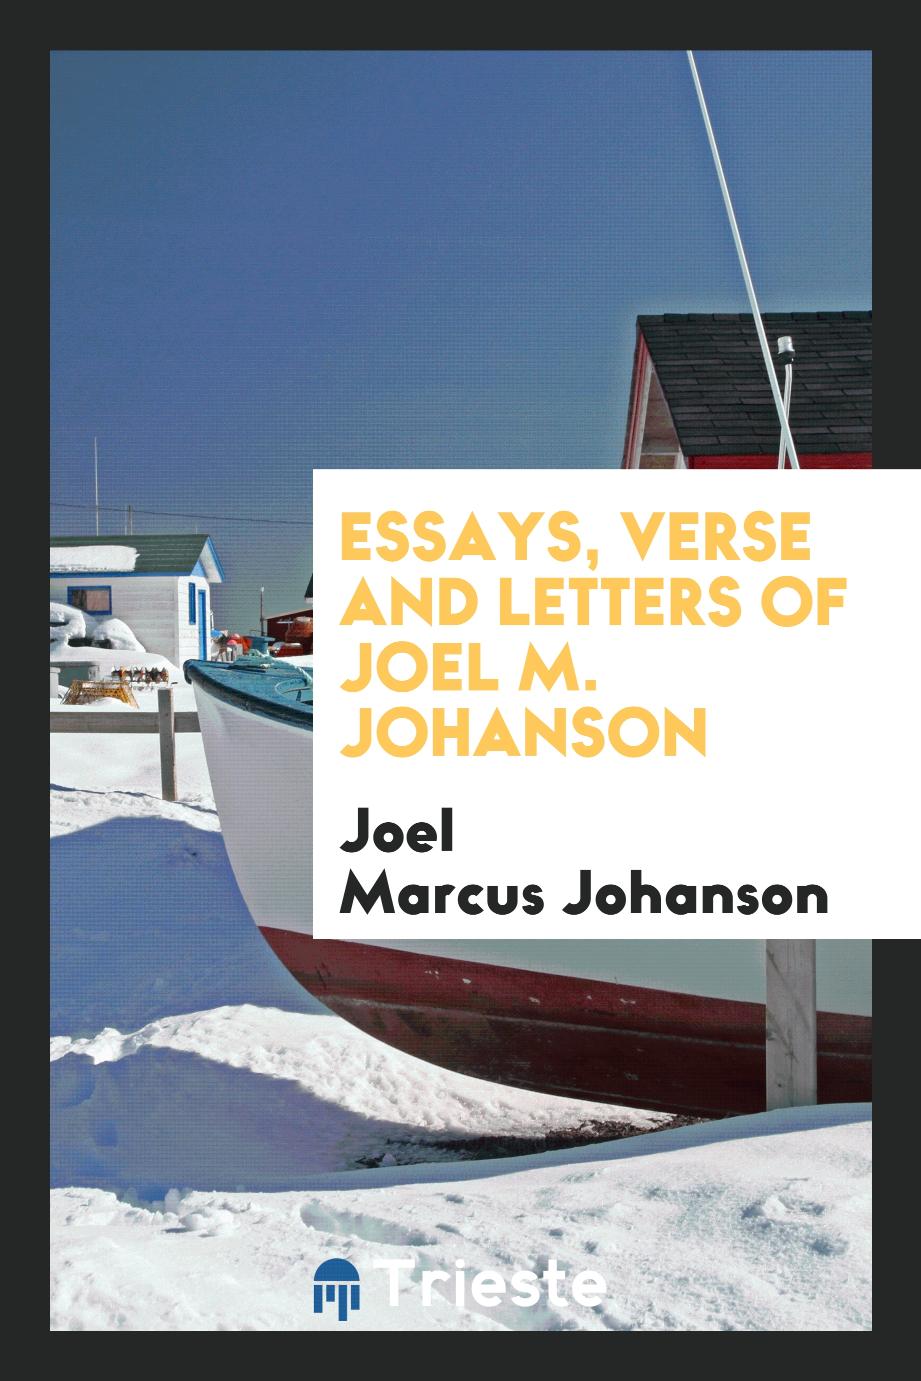 Essays, verse and letters of Joel M. Johanson